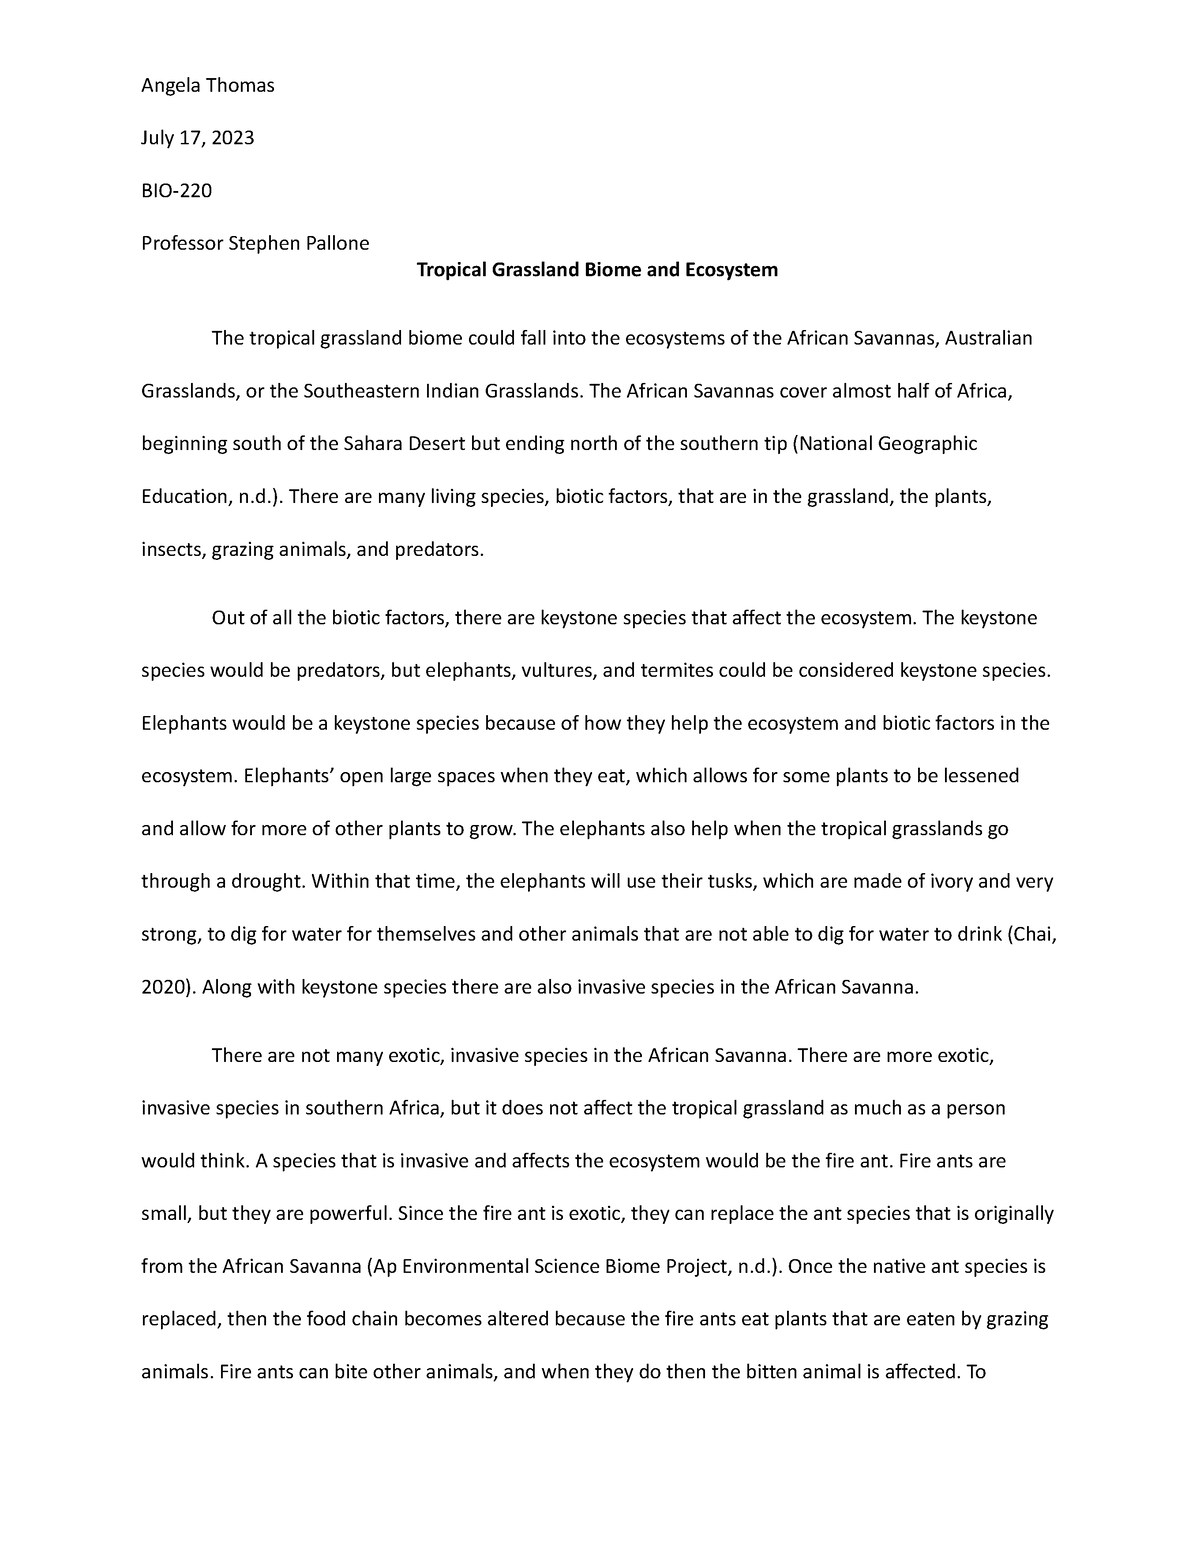 bio 220 topic 2 essay